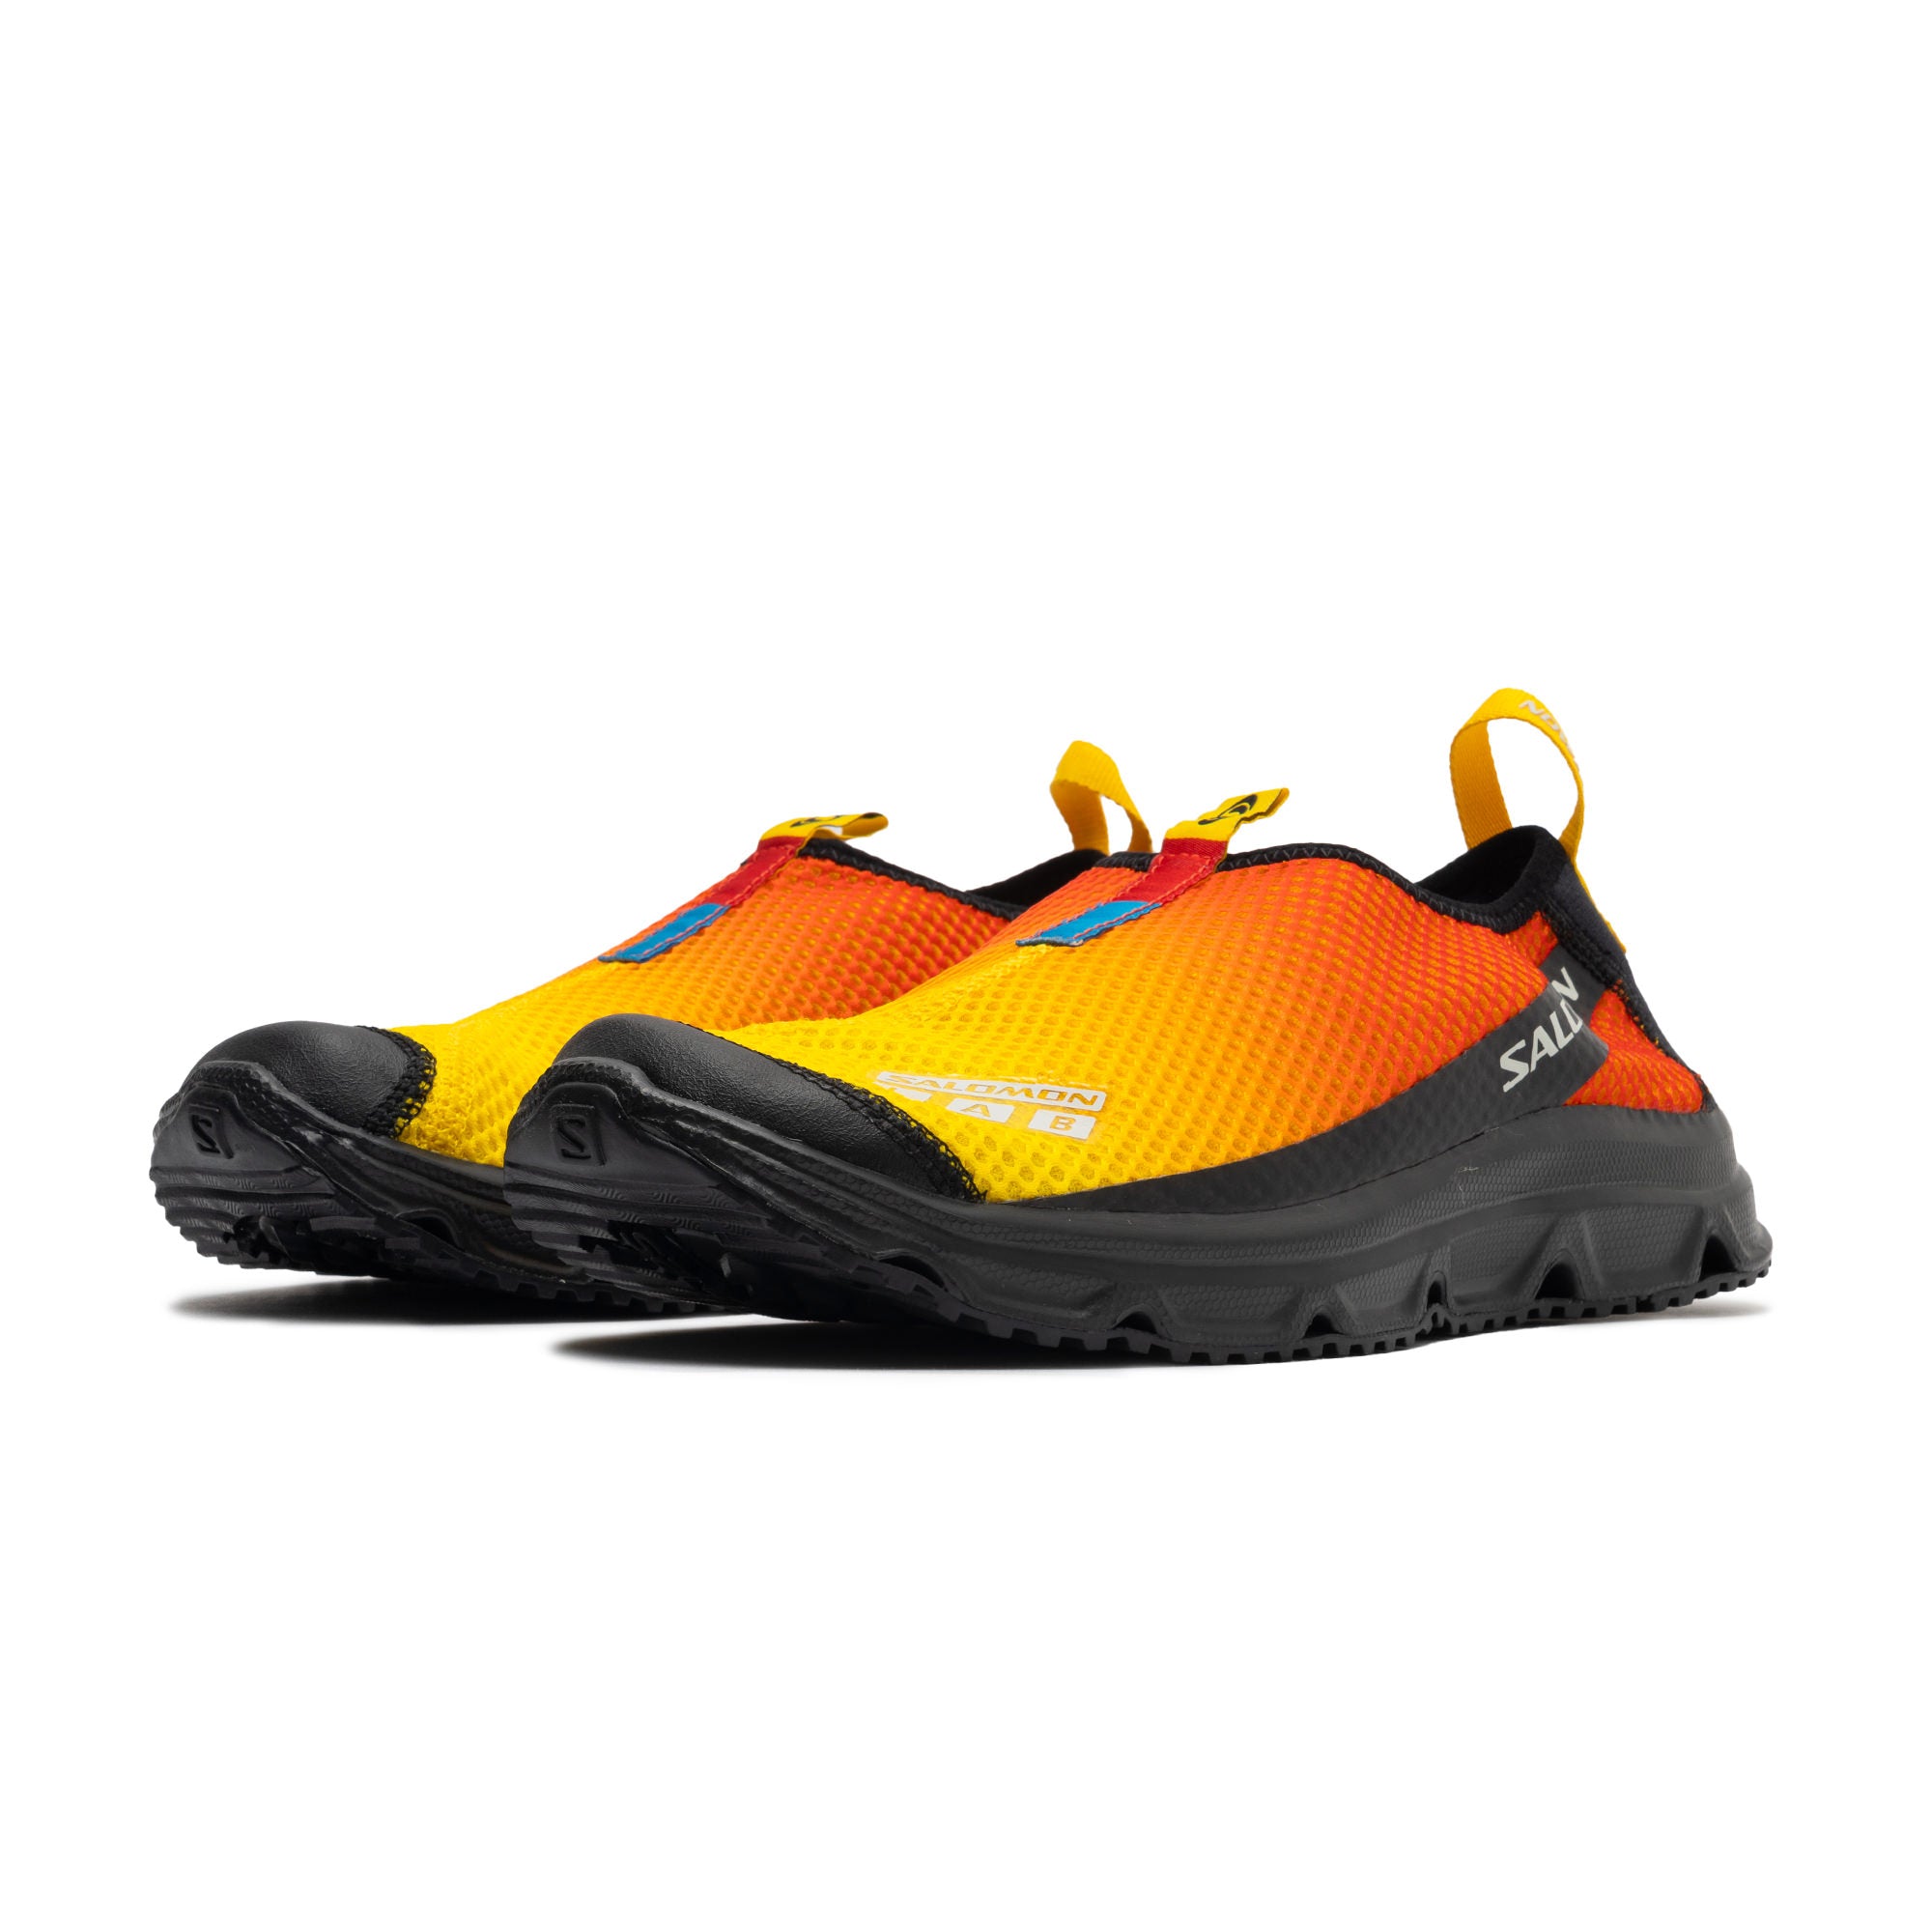 zapatillas de running salomon Shoes ritmo bajo media maratón talla 37.5